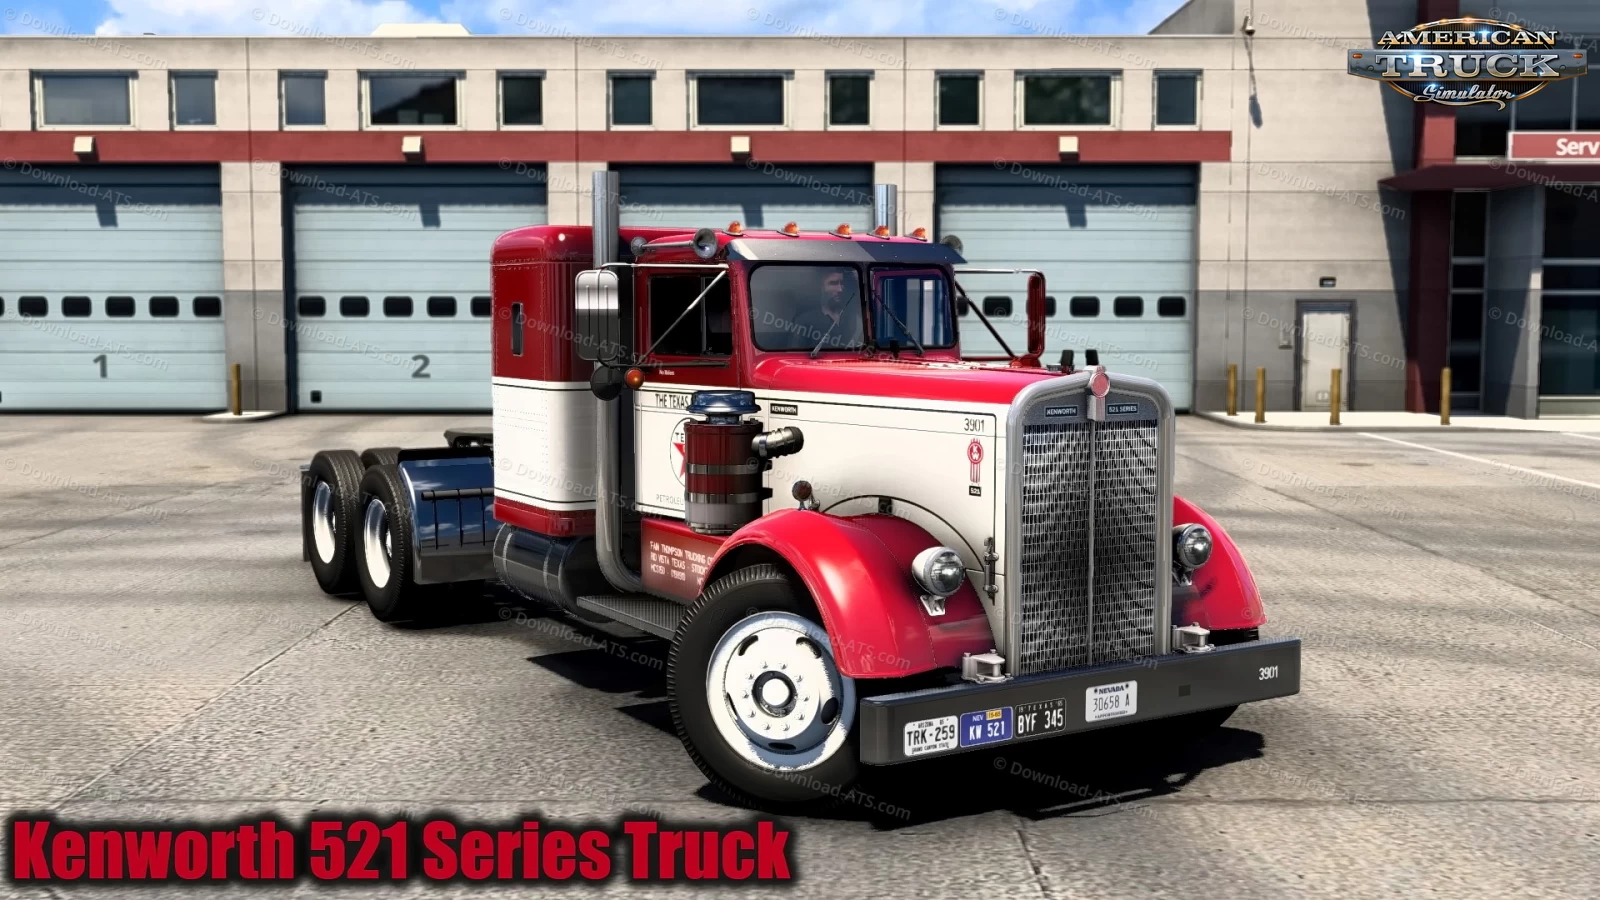 Kenworth 521 Series Truck + Interior v1.4 (1.47.x) for ATS